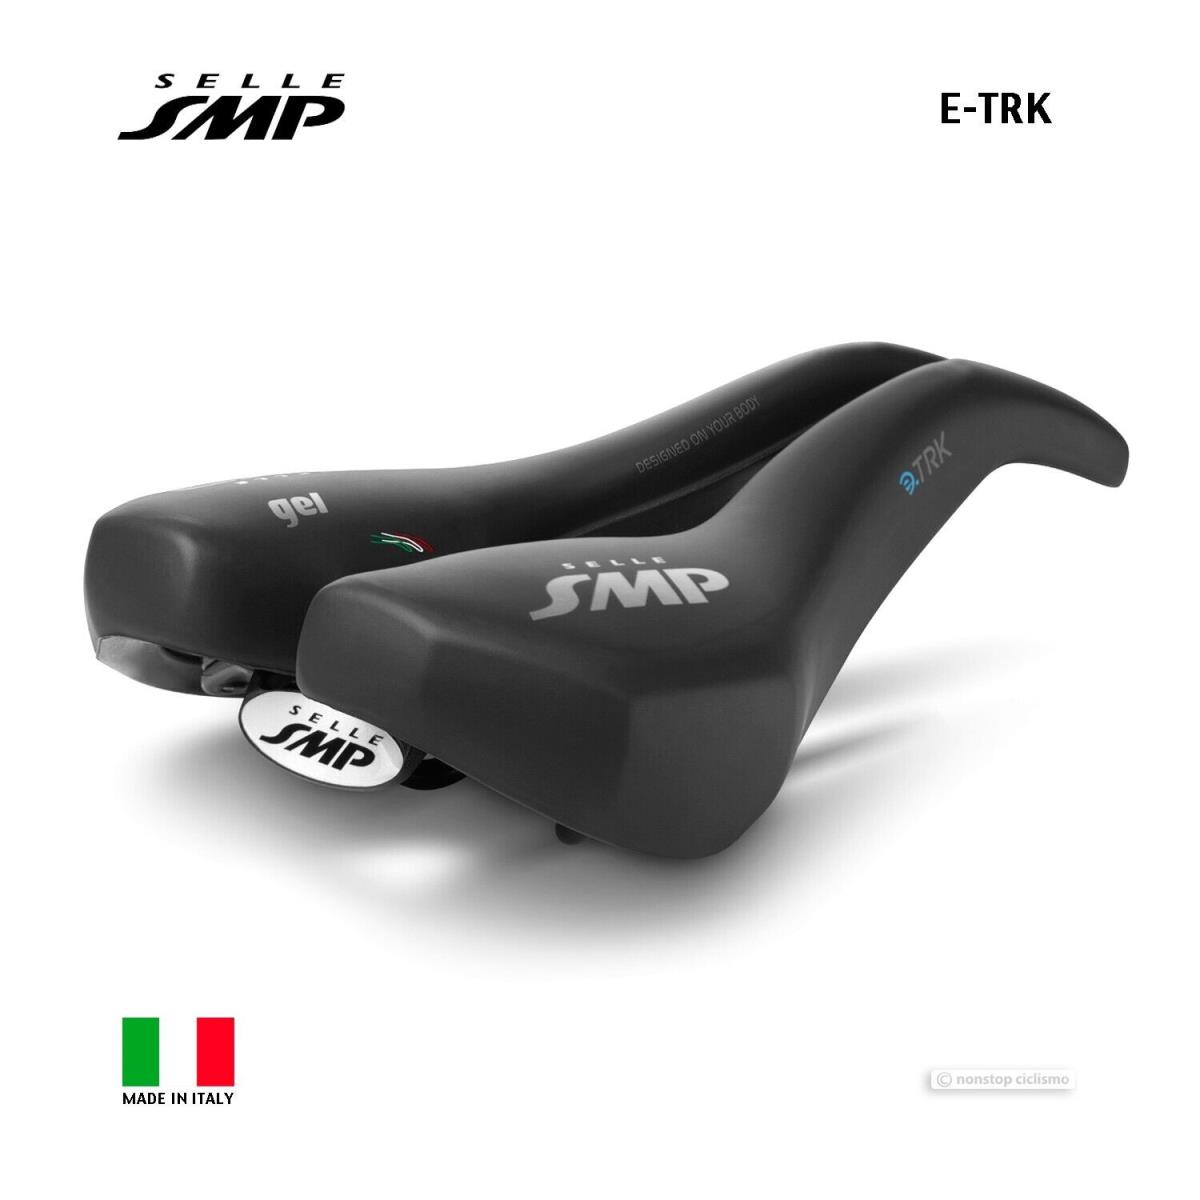 Selle Smp E-trk Gel E-bike Saddle : Black - Made IN Italy